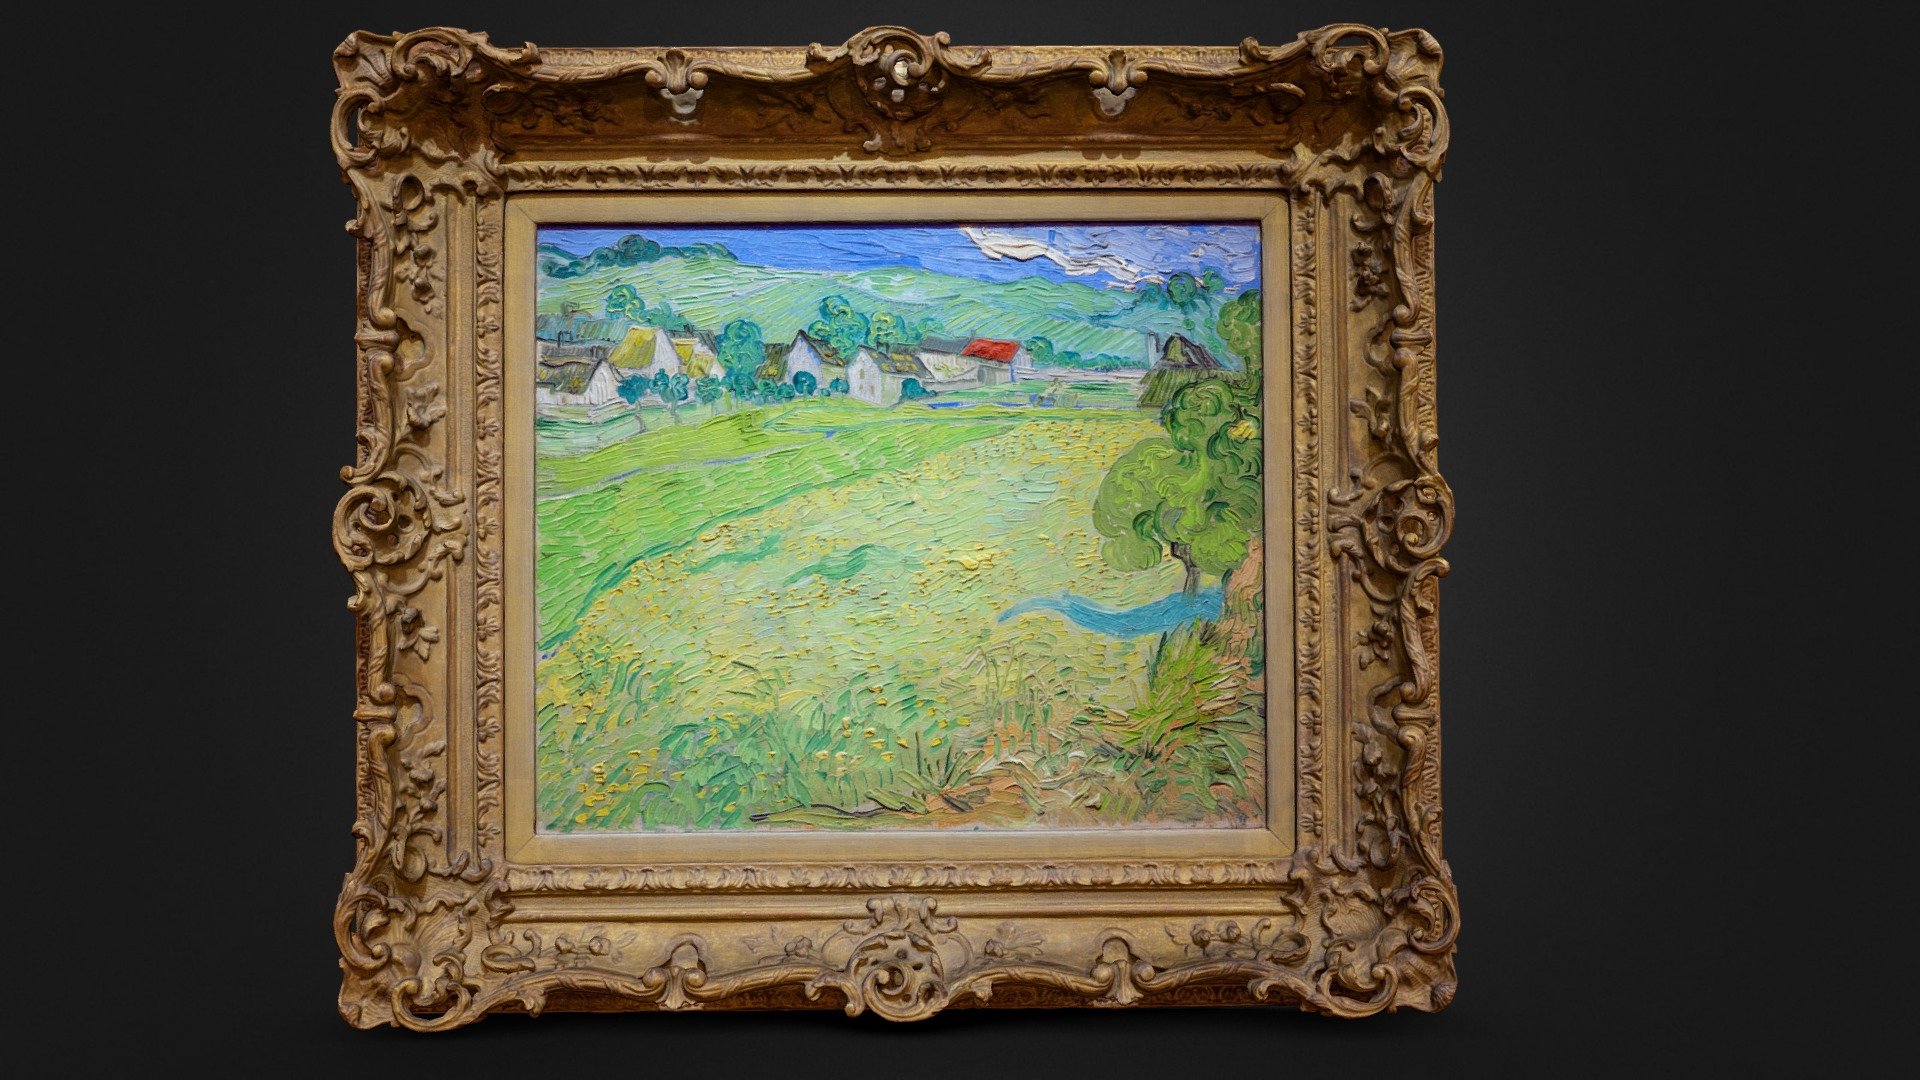 Les Vessenots in Auvers
1890
Oil on canvas. 55 x 65 cm
Museo Nacional Thyssen-Bornemisza, Madrid
Inv. no. 559 (1978.41) - Vincent van Gogh - Les Vessenots in Auvers - 3D model by Morty 3d model